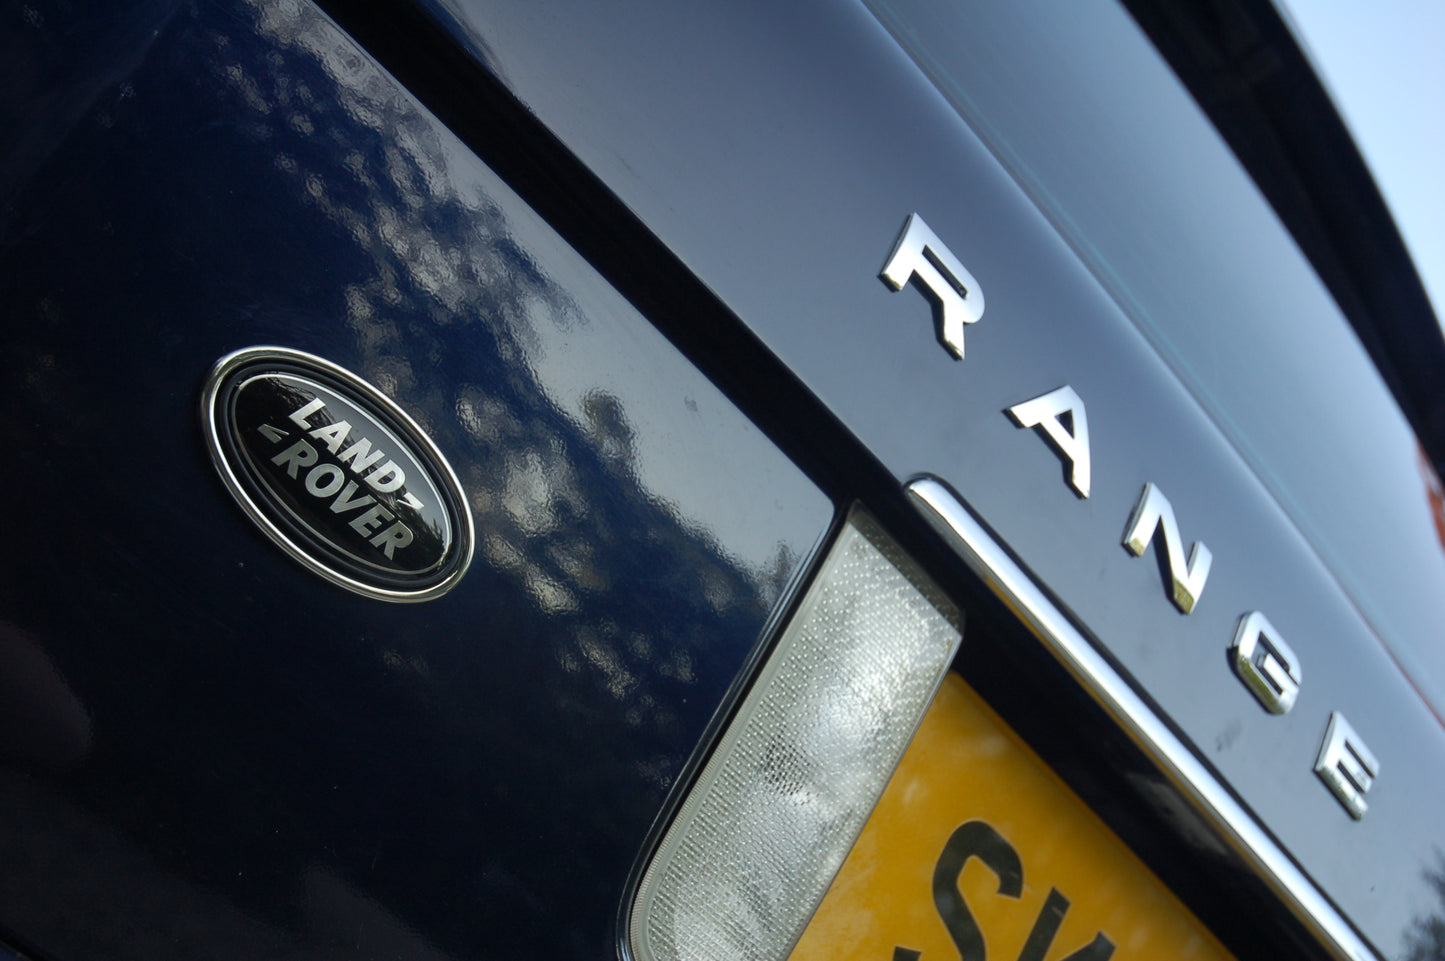 Rear Tailgate Chrome Badge Surround - for Range Rover L322